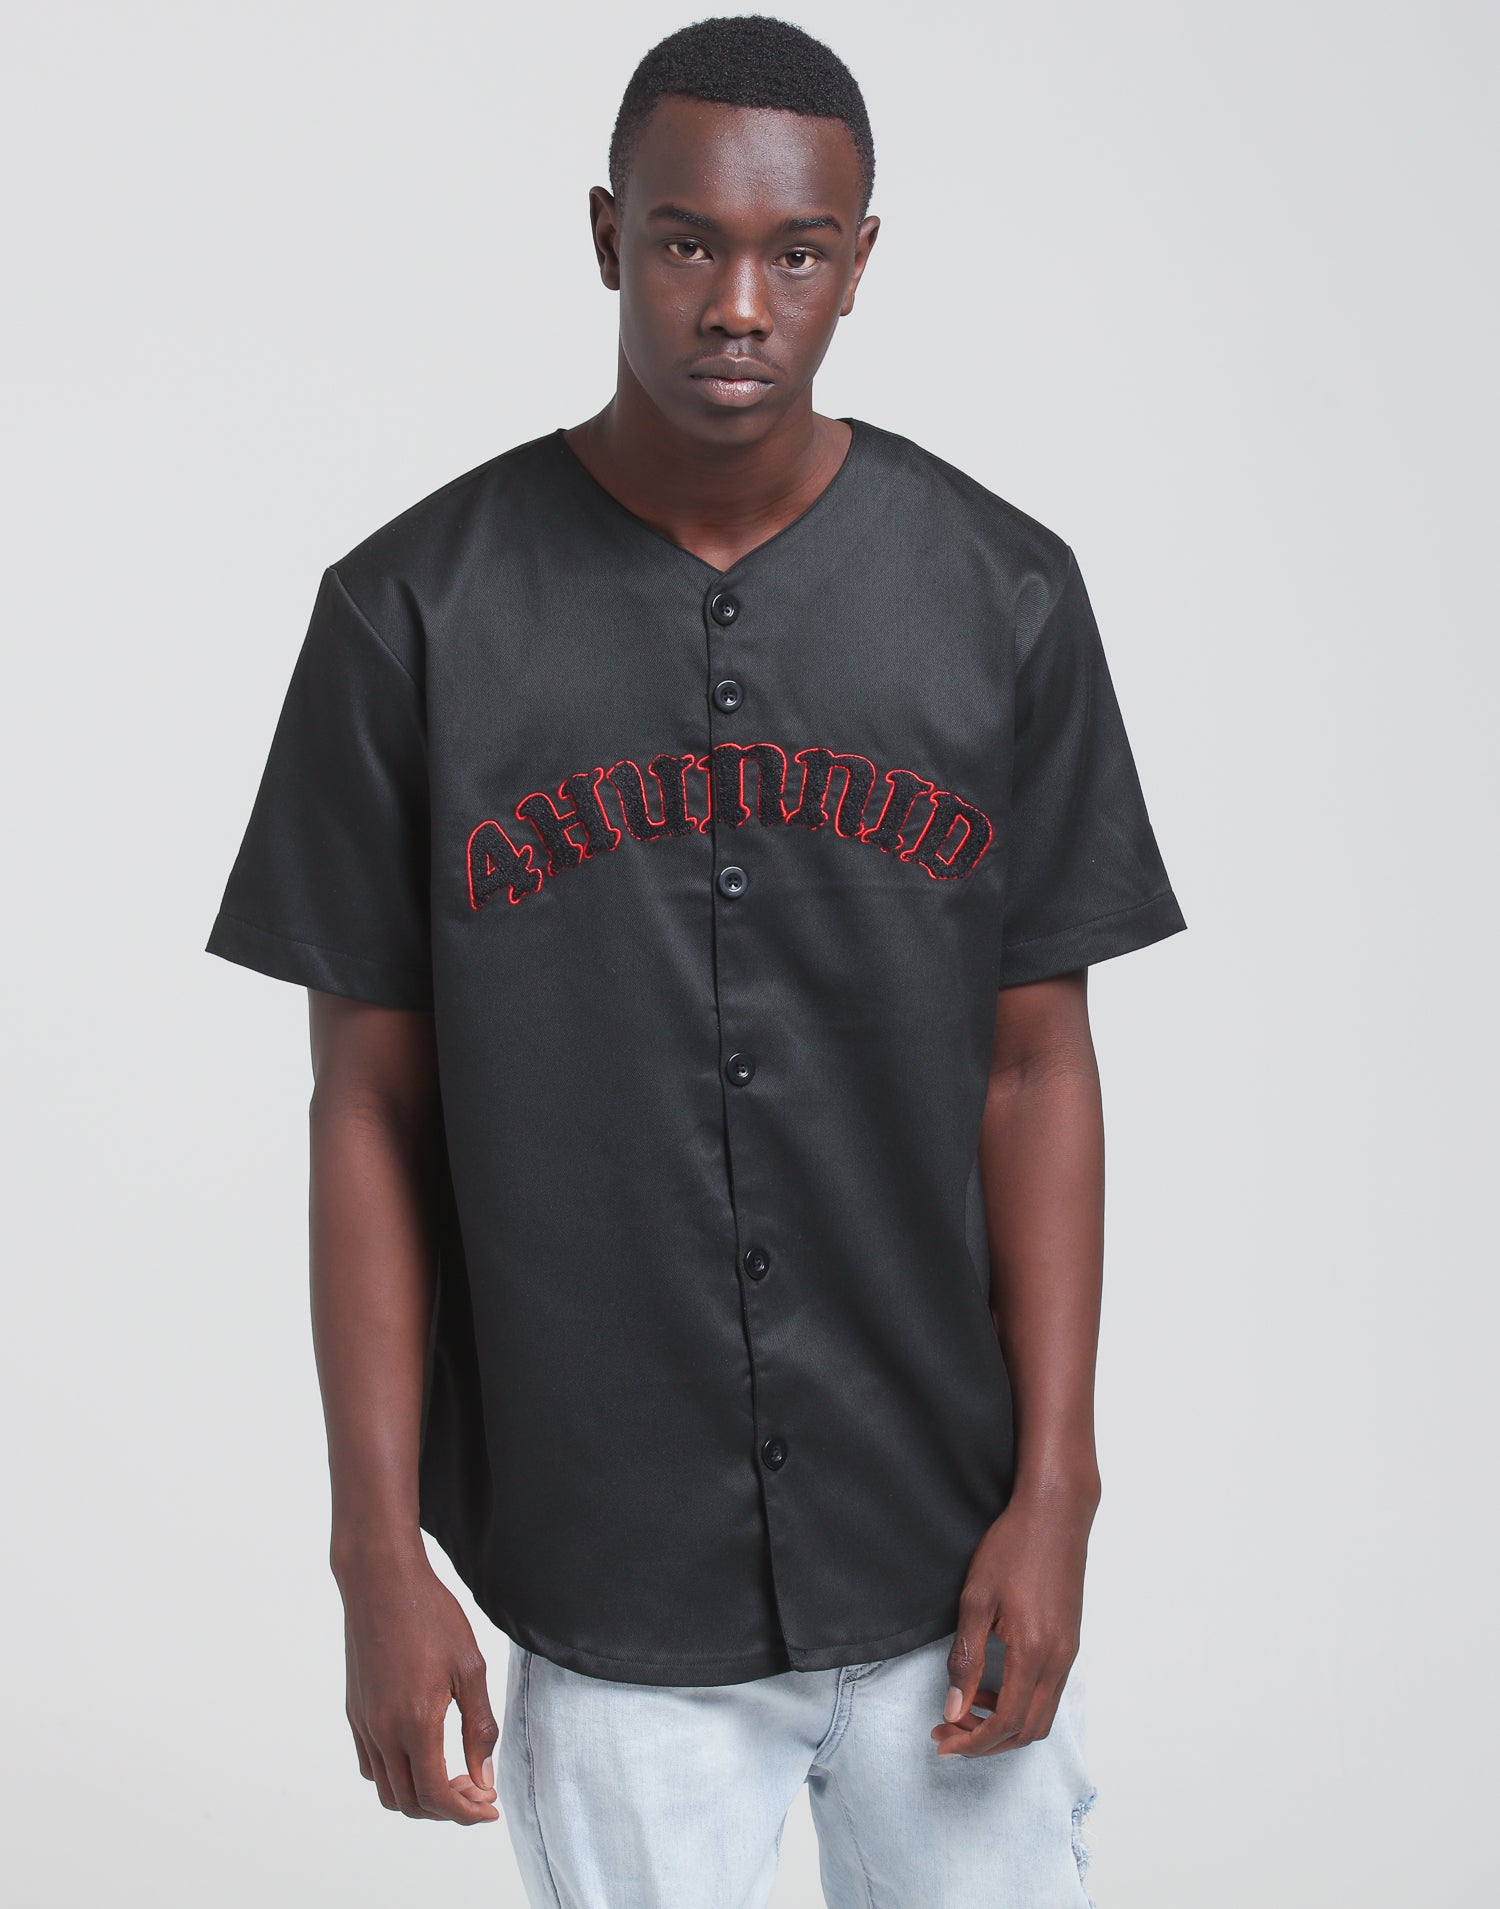 4Hunnid Baseball Jersey Black | Culture 